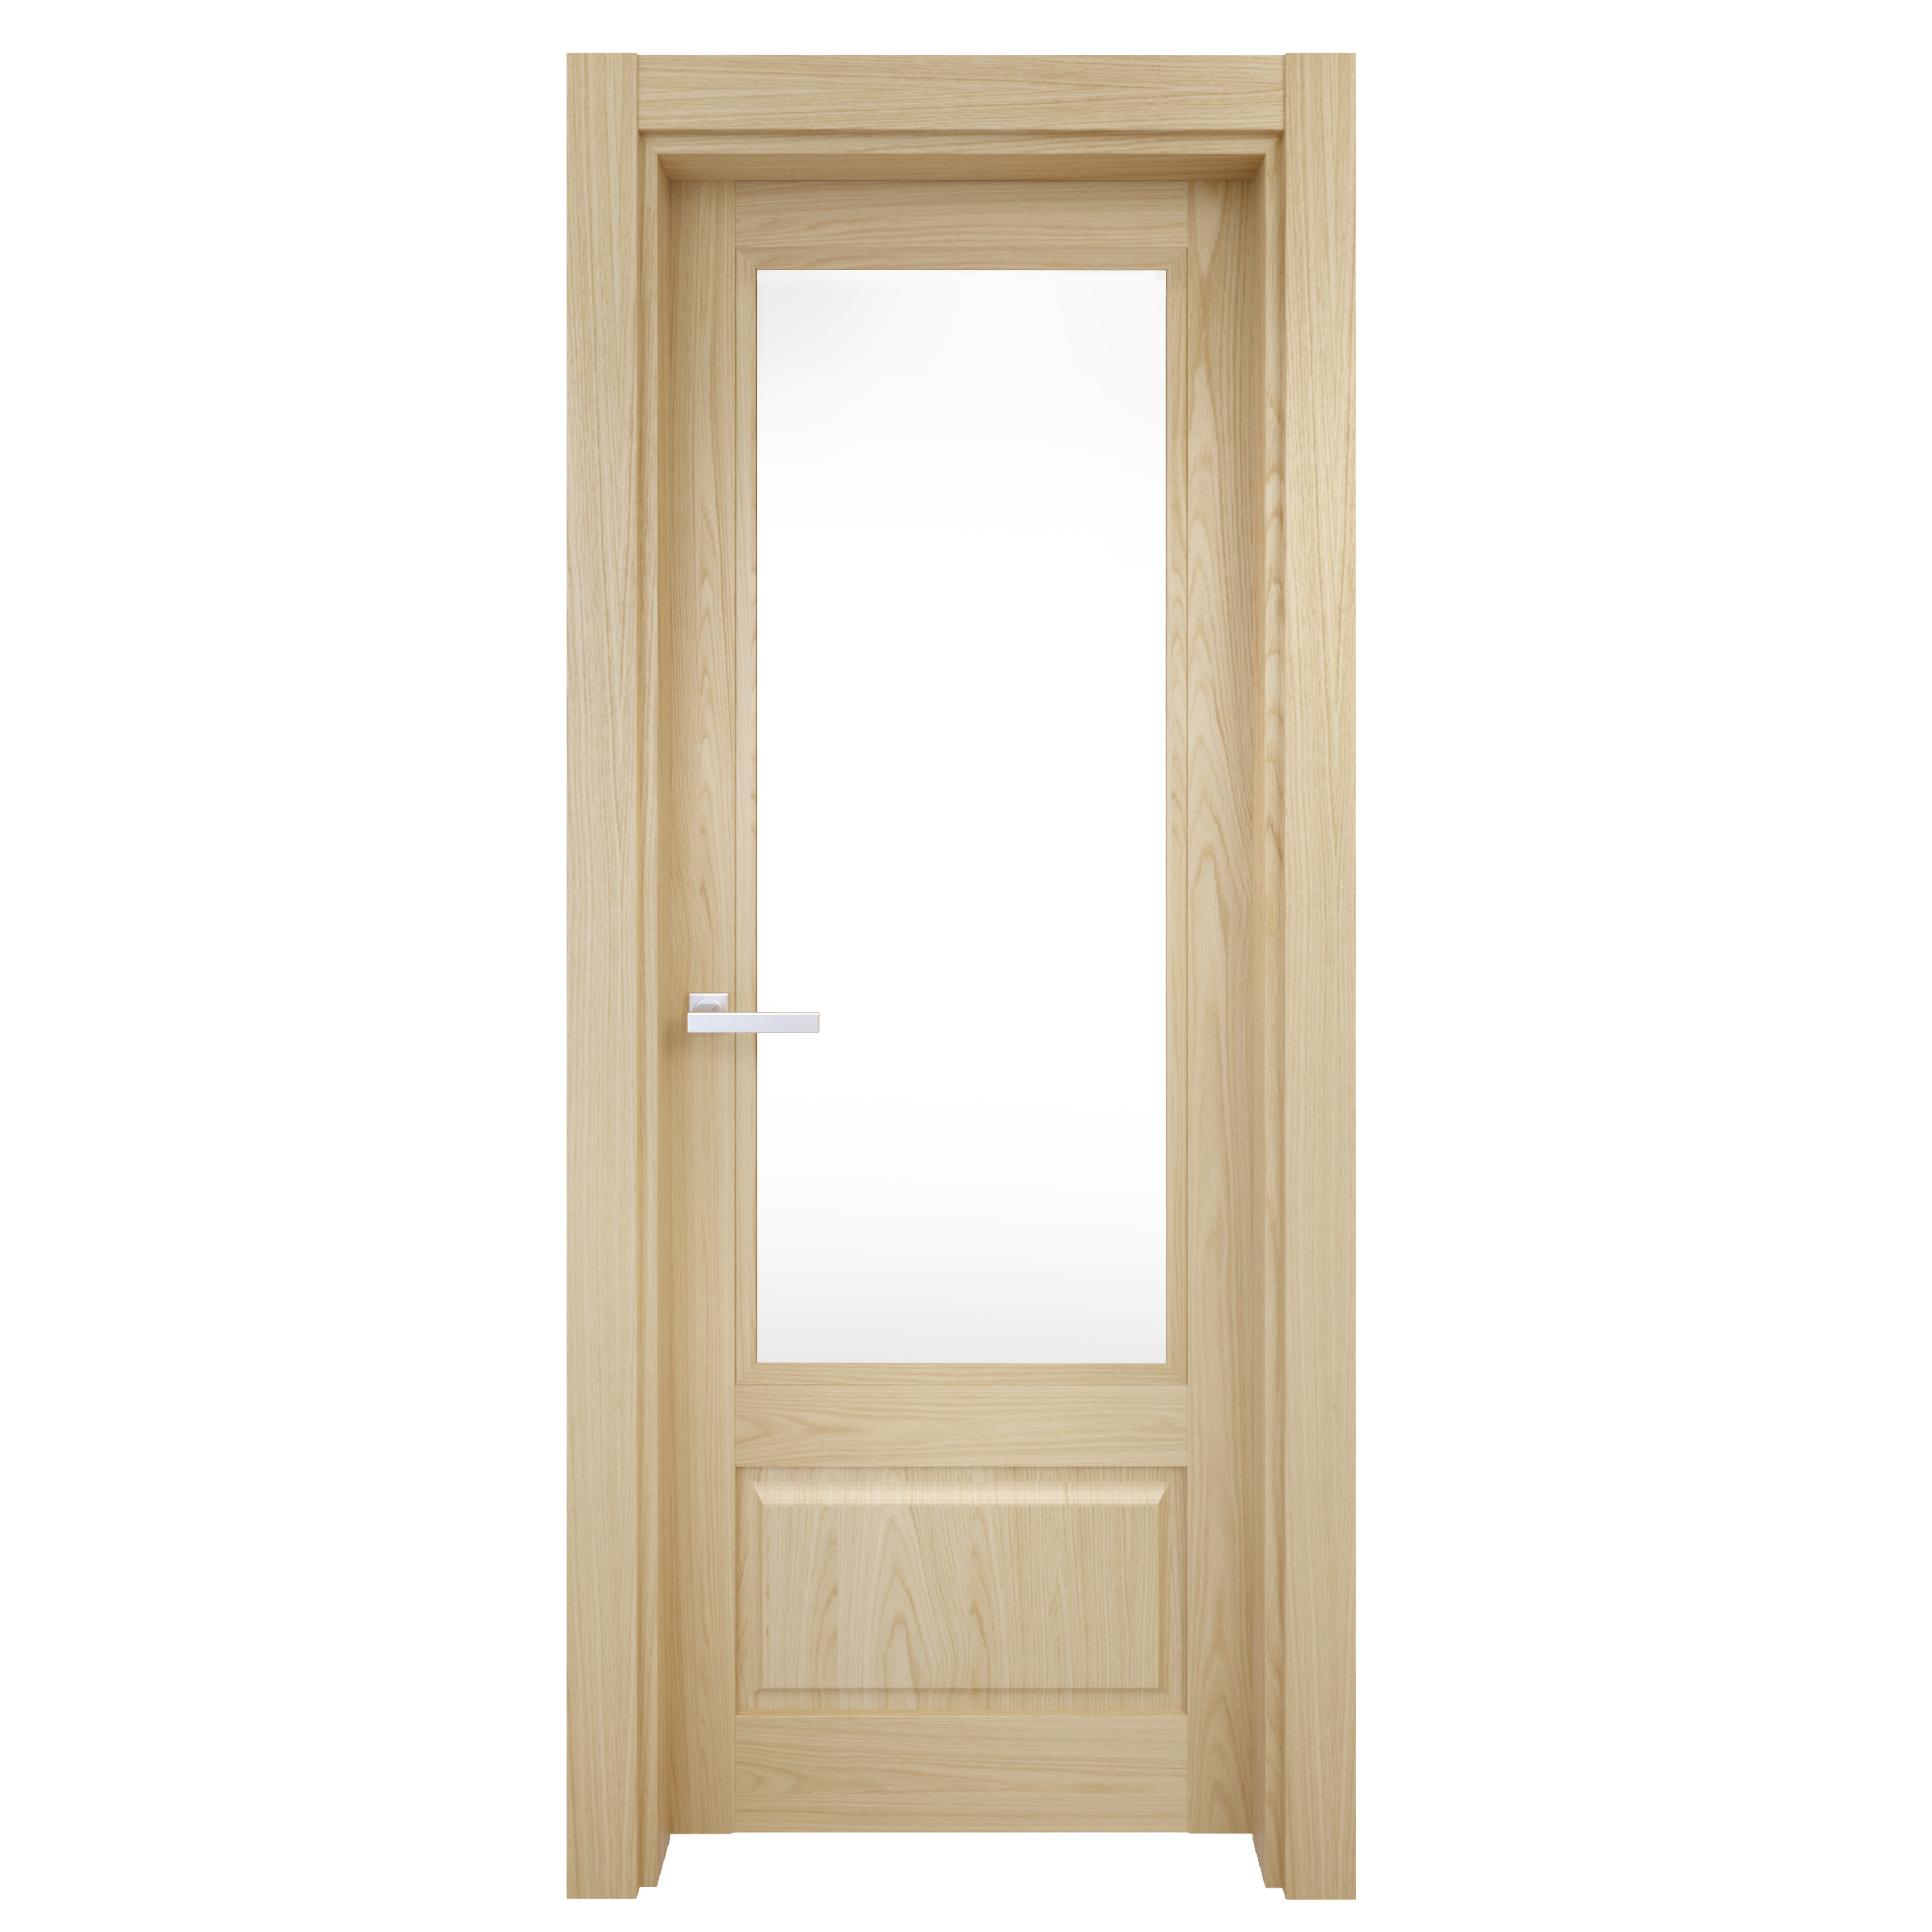 Puerta abatible sofia blanca line plus apertura derecha de 9x62.5 cm